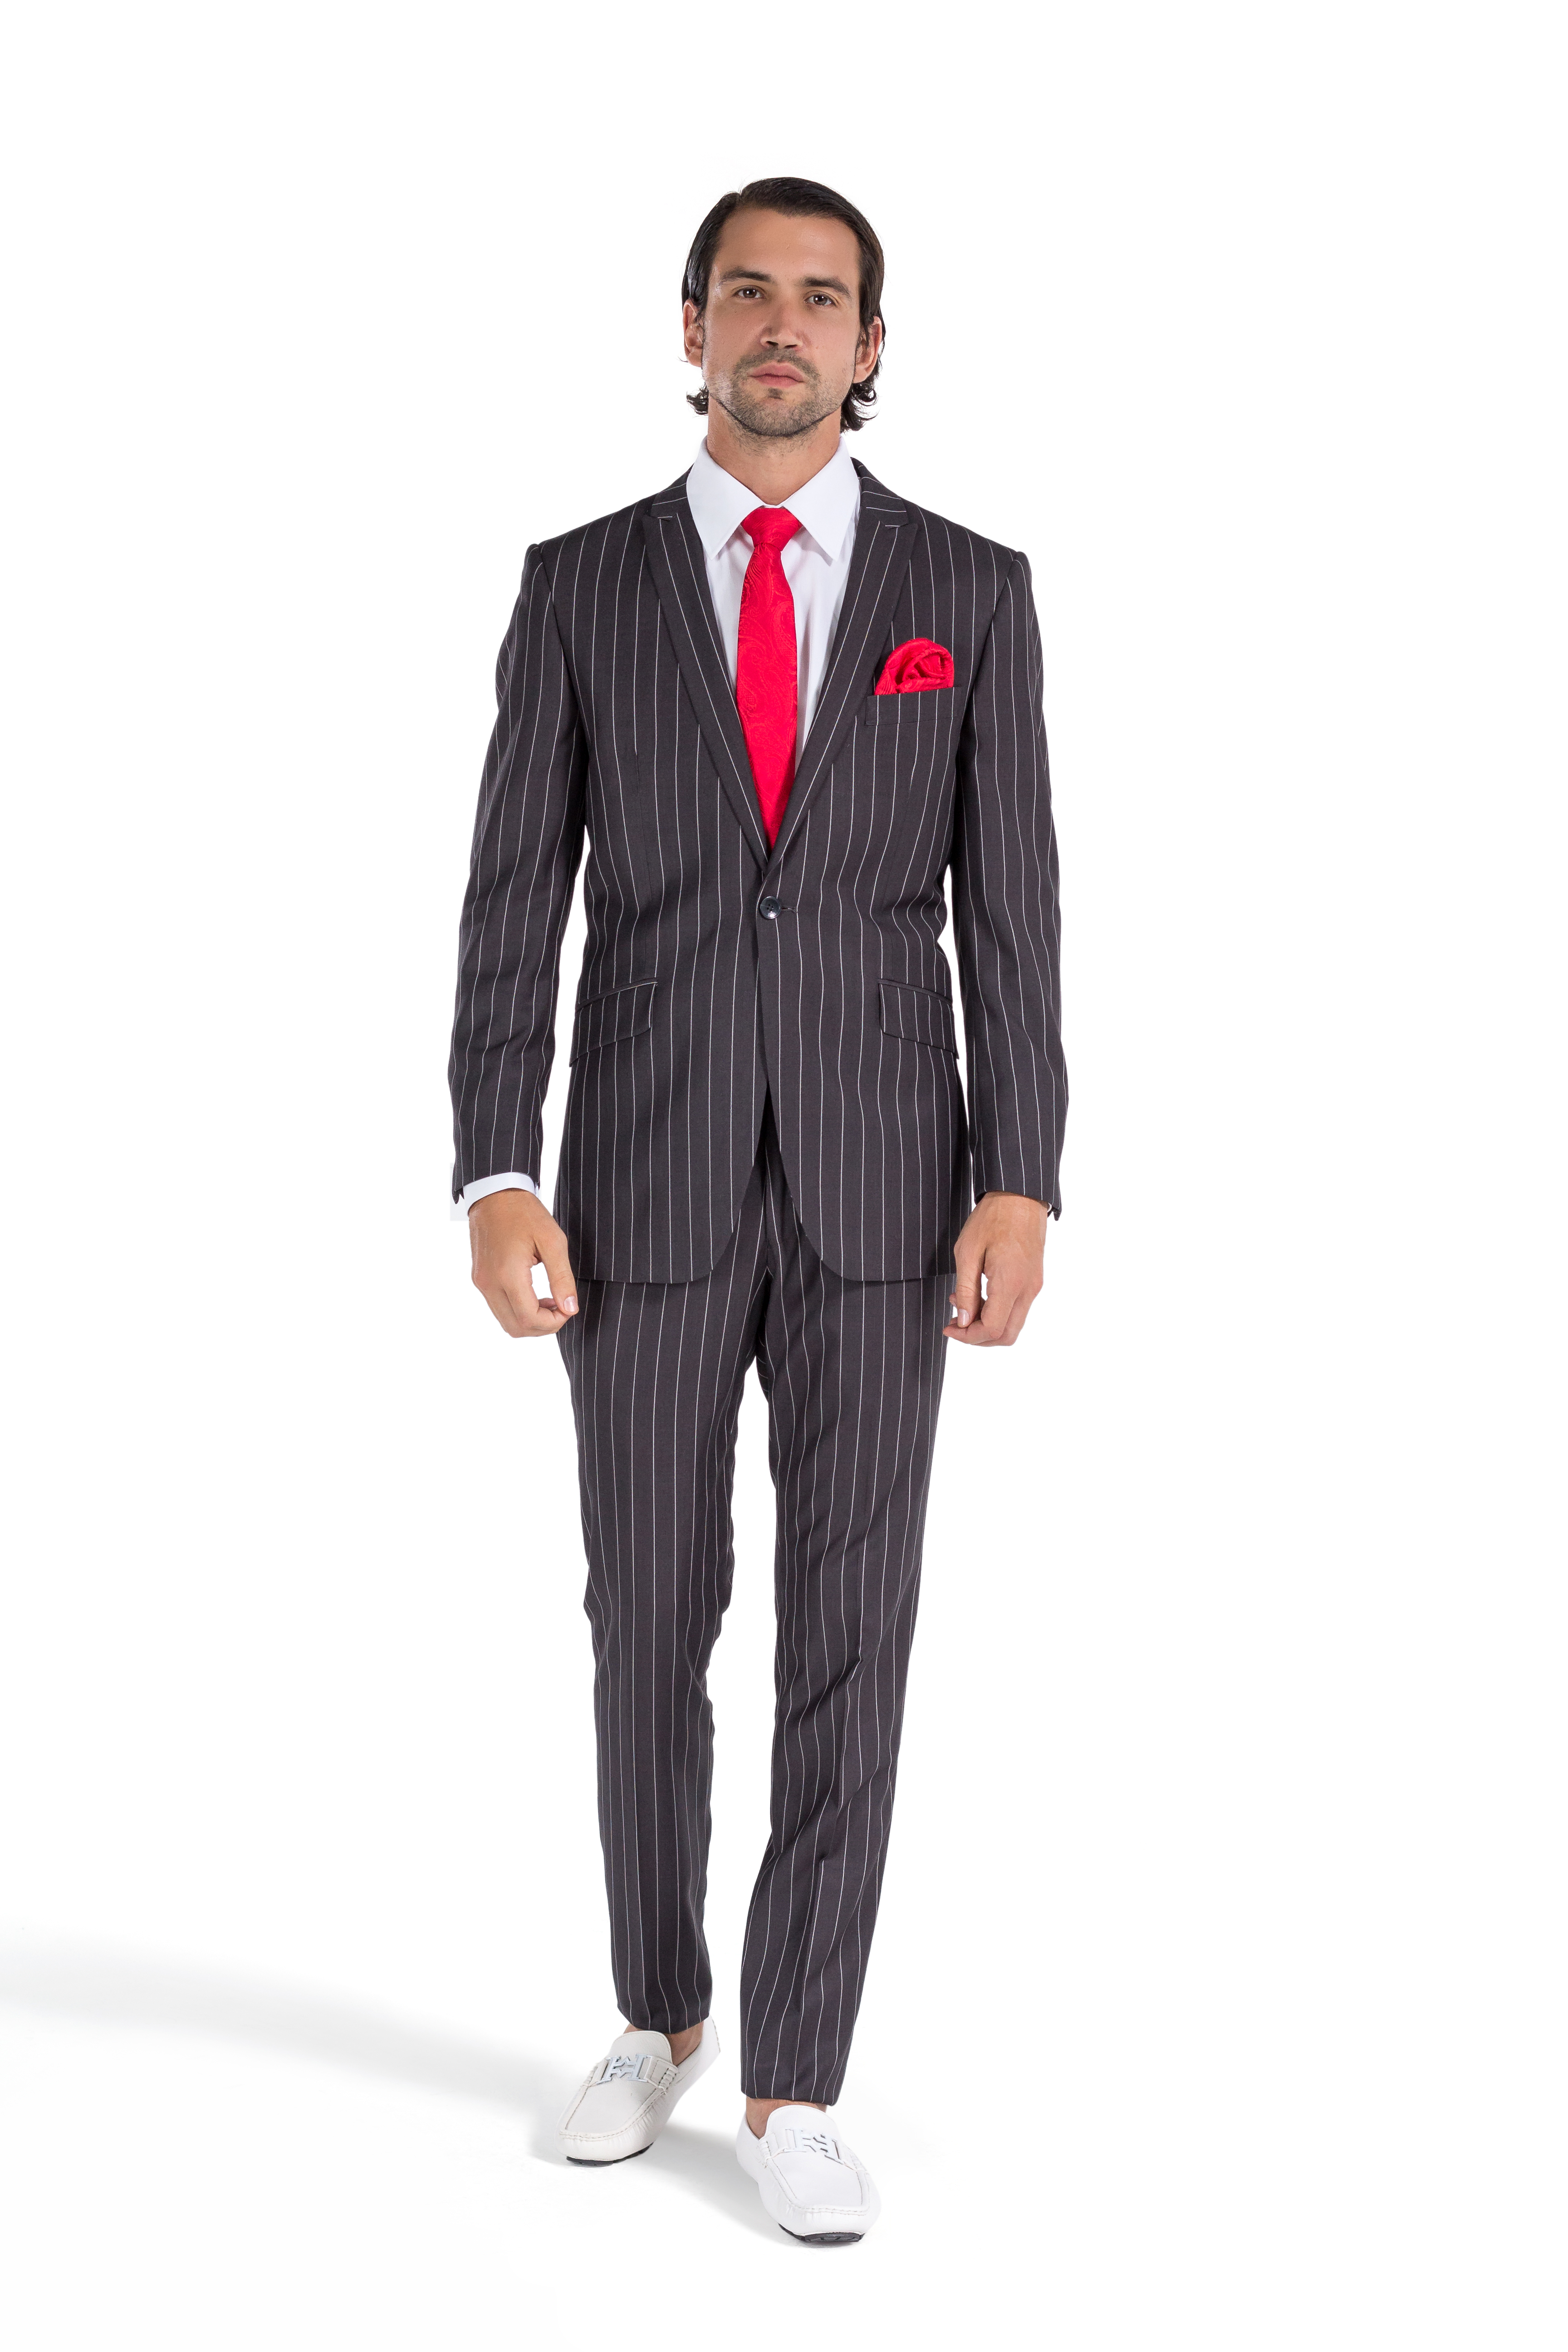 Porto Filo Men’s 2Pcs Gray with White Pin Strip Suit – Portofilo Suit